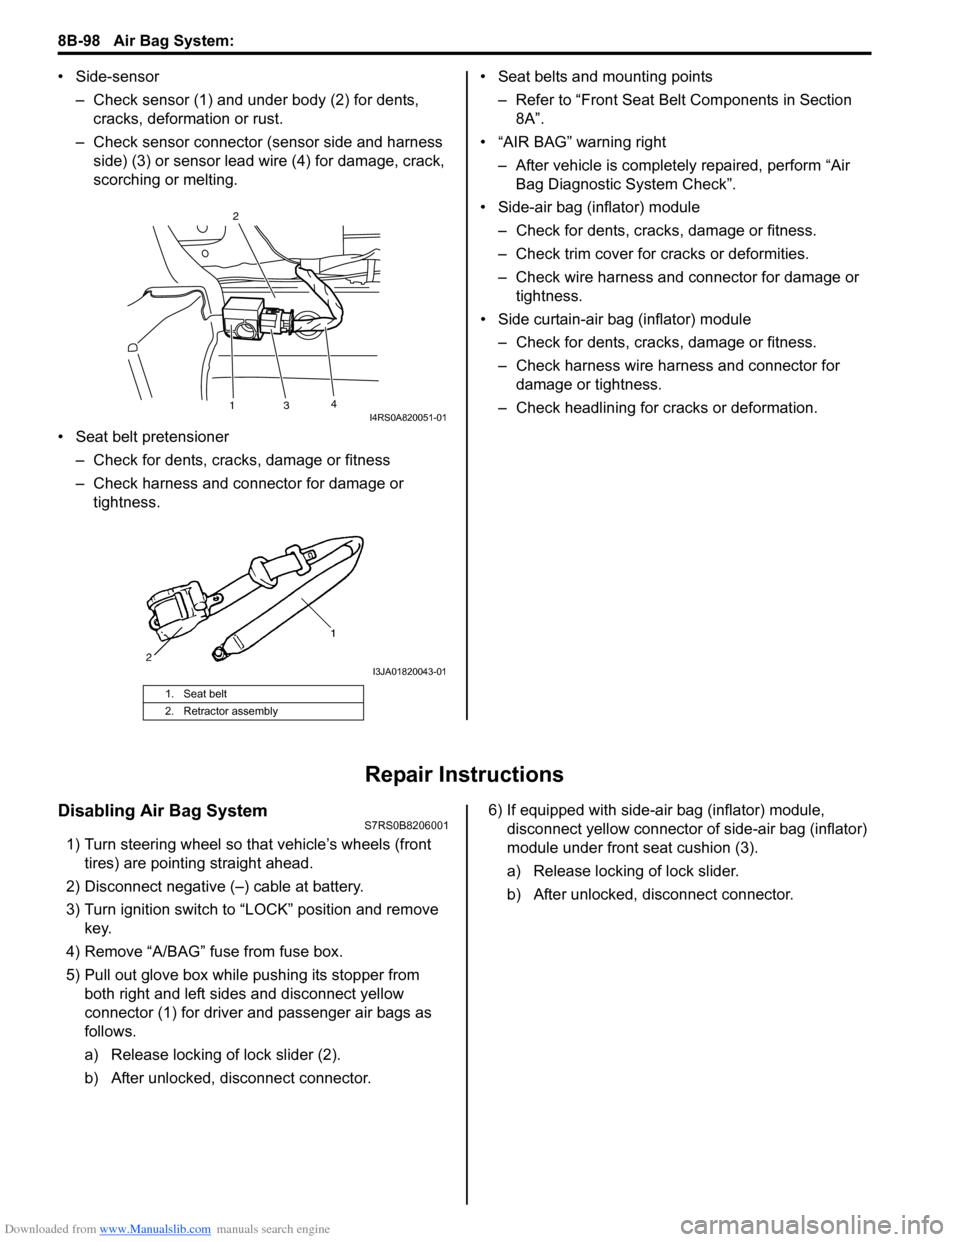 SUZUKI SWIFT 2006 2.G Service Workshop Manual Downloaded from www.Manualslib.com manuals search engine 8B-98 Air Bag System: 
• Side-sensor– Check sensor (1) and under body (2) for dents, cracks, deformation or rust.
– Check sensor connecto